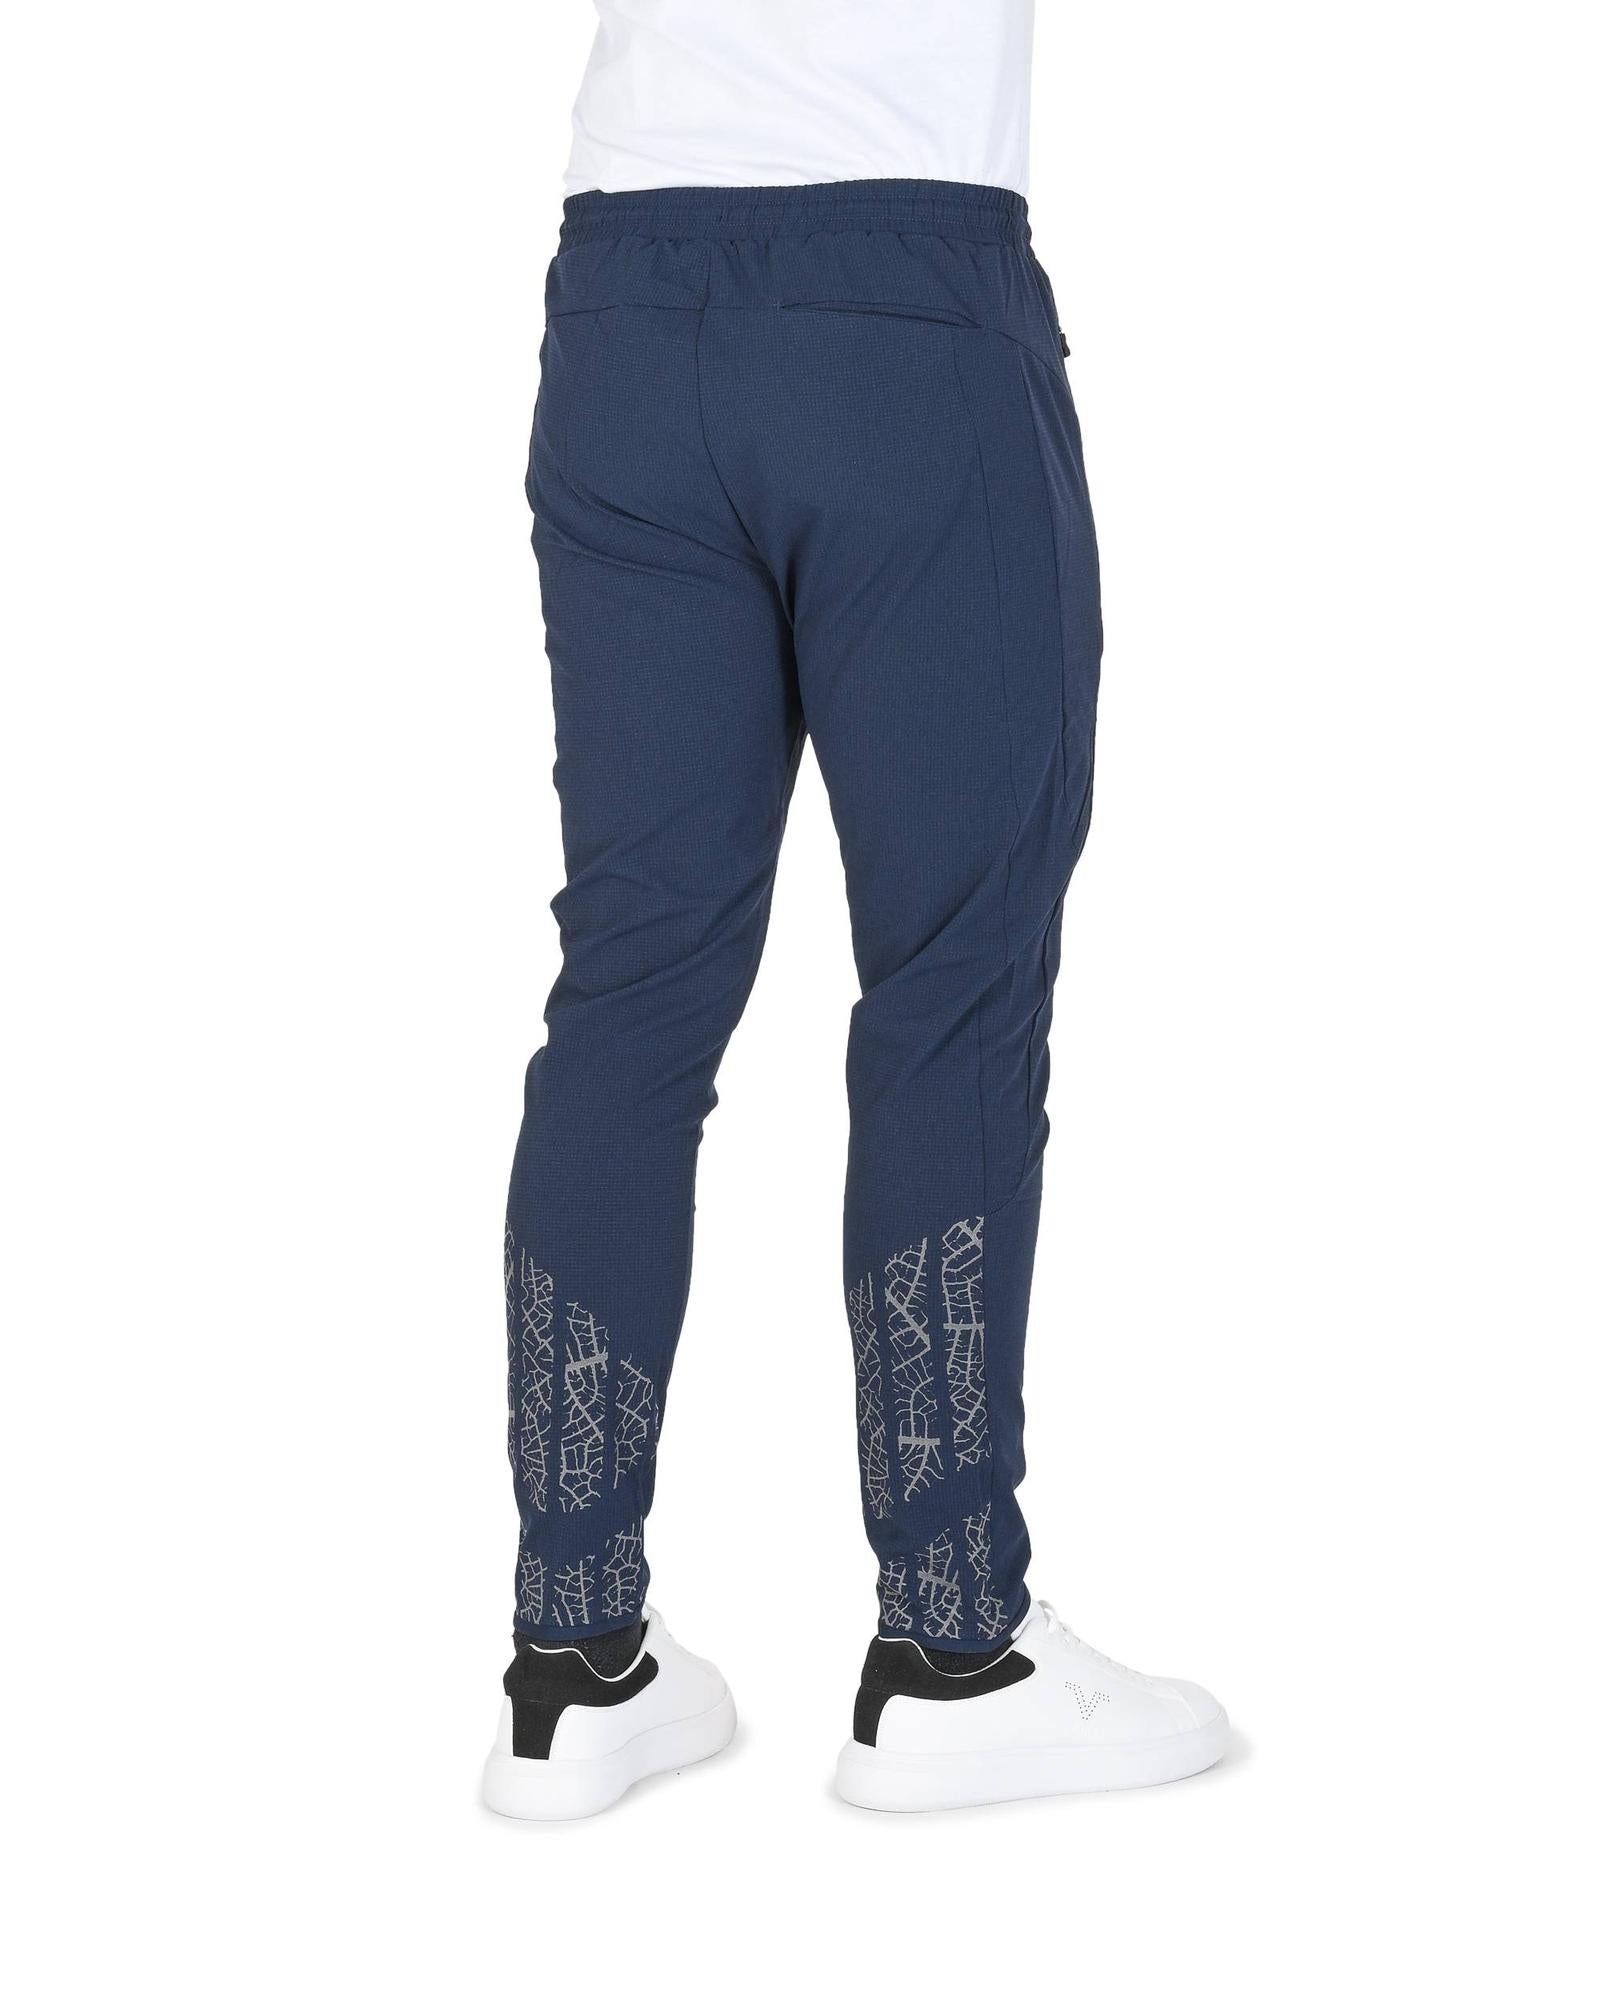 Silver/Navy blue Stride Hugo Boss Men'S Cotton Polyester Blend Pants